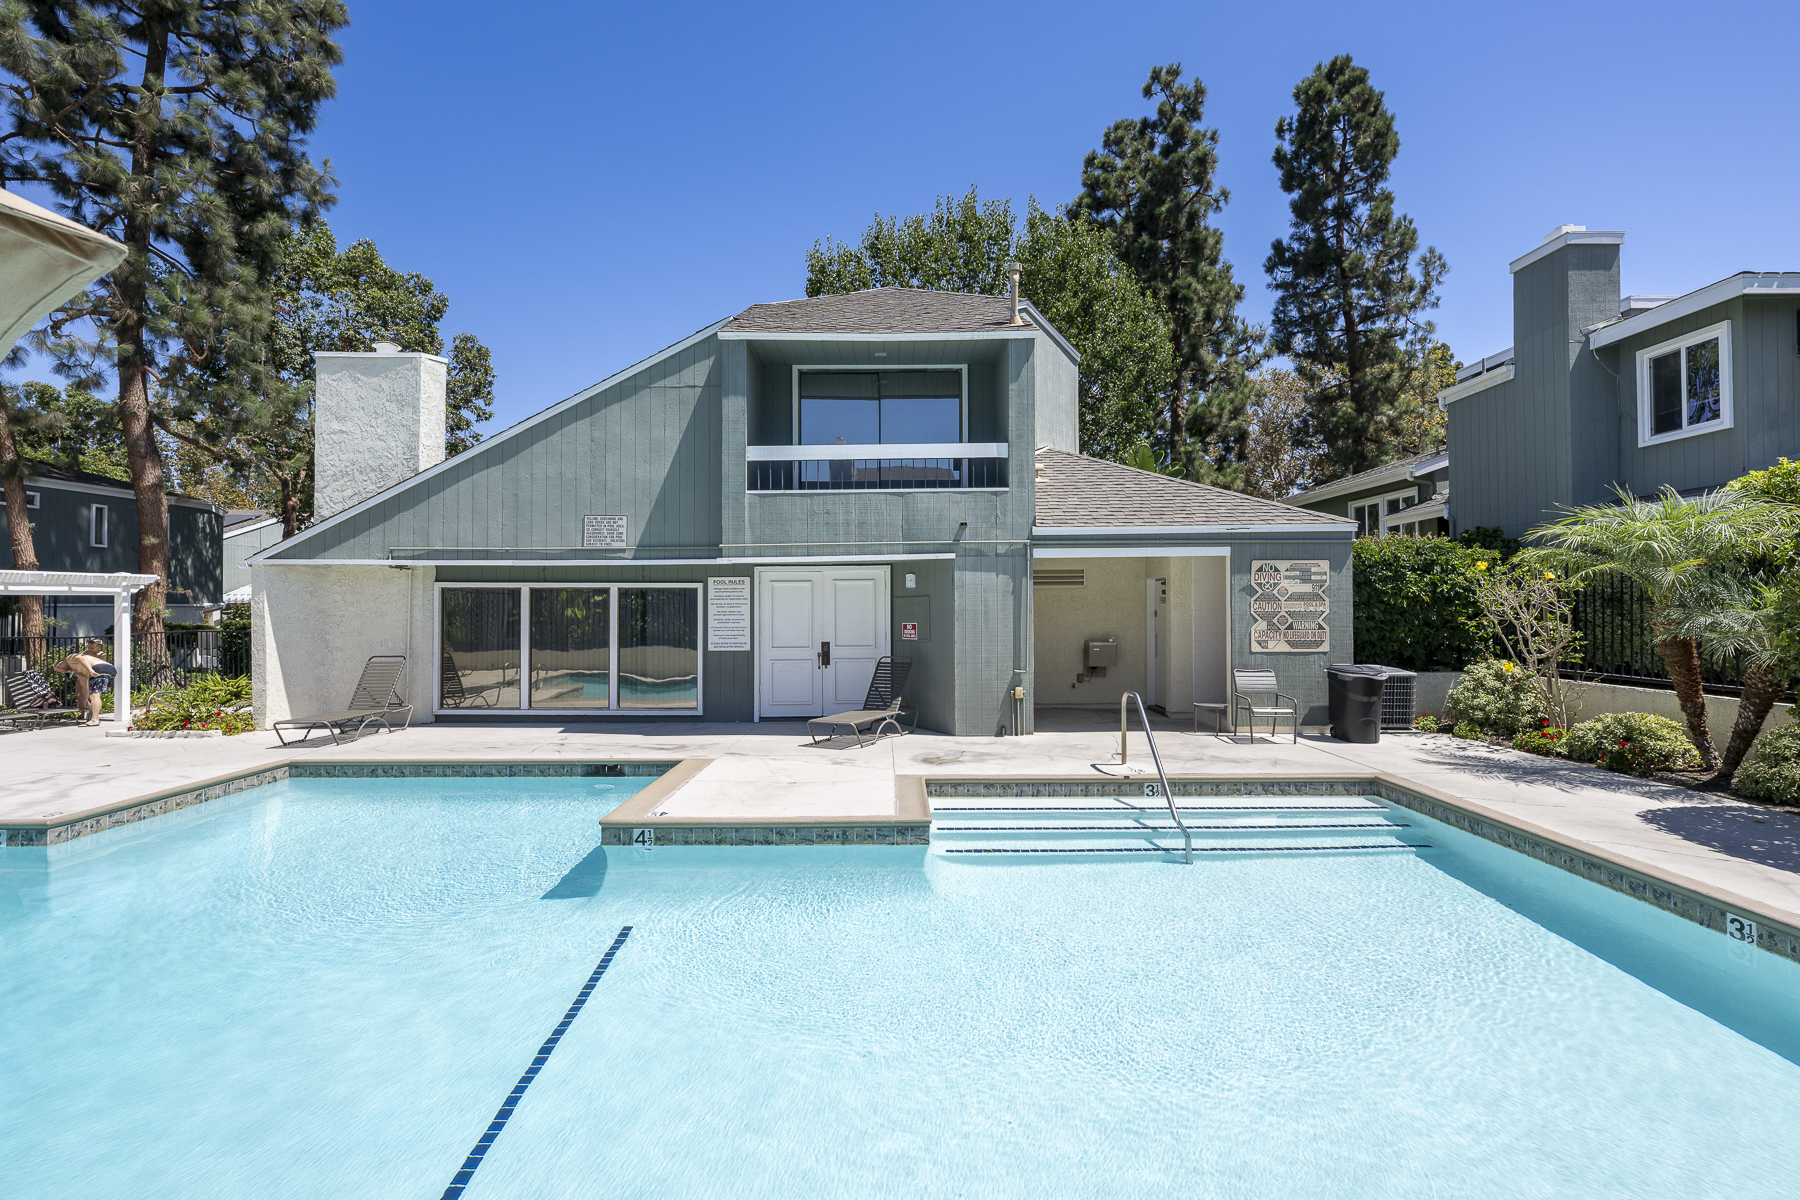 3424 Pinebrook Costa Mesa CA 92626: Pool with pool house.